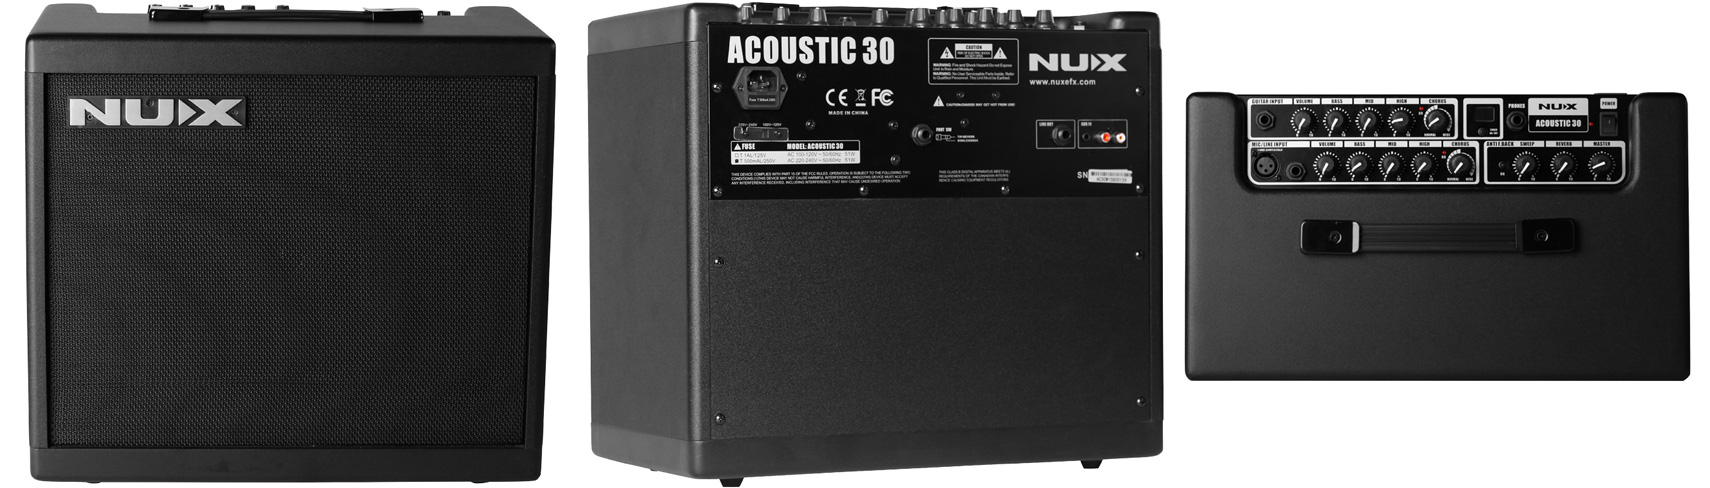 nuX Acoustic 30 Combo Amp